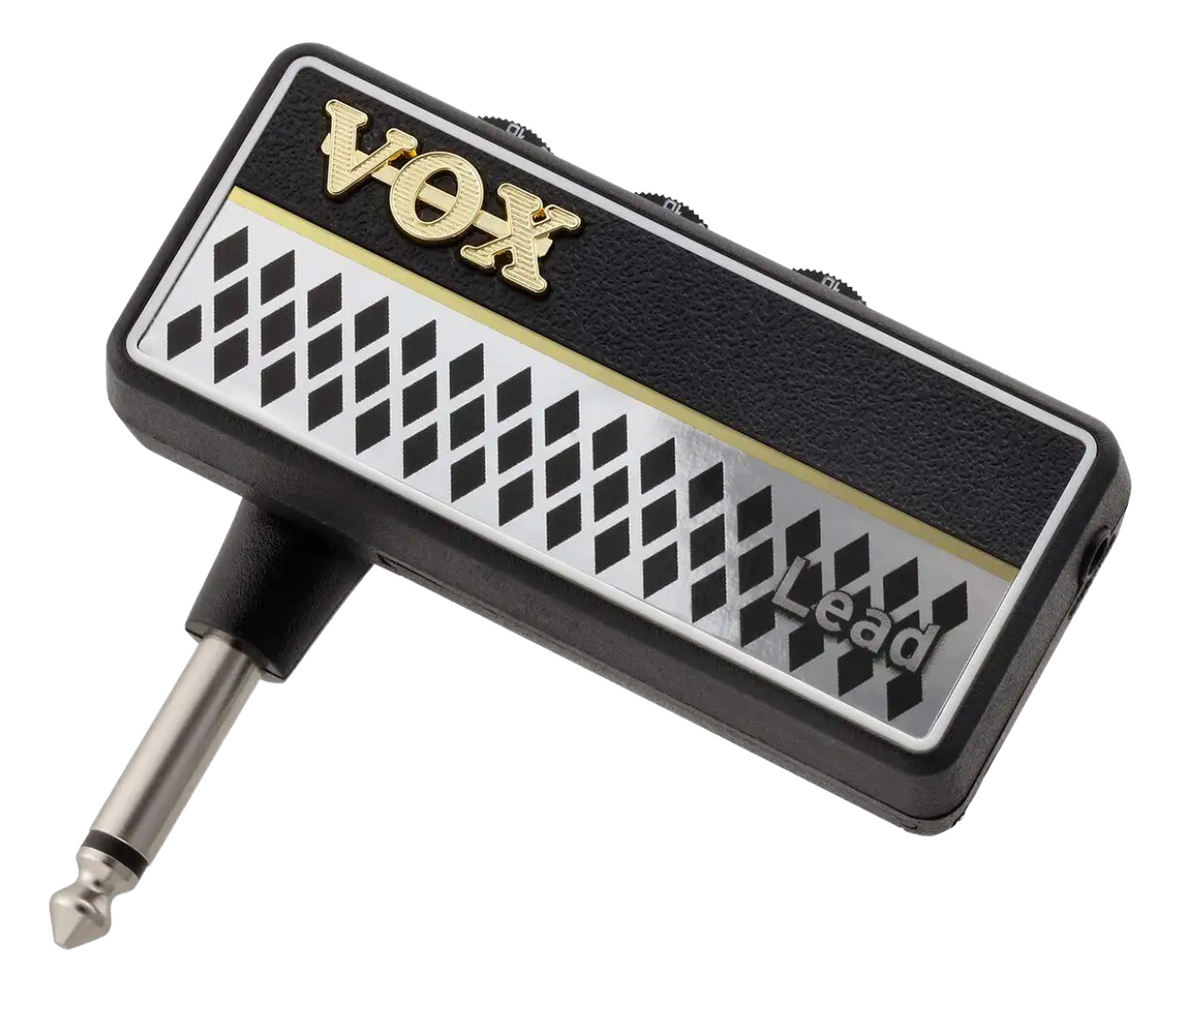 VOX AP2LD – Amplug 2 Lead Guitar Amplifier Headphones, Searing, High Gain Lead Tone Perfect for Solos